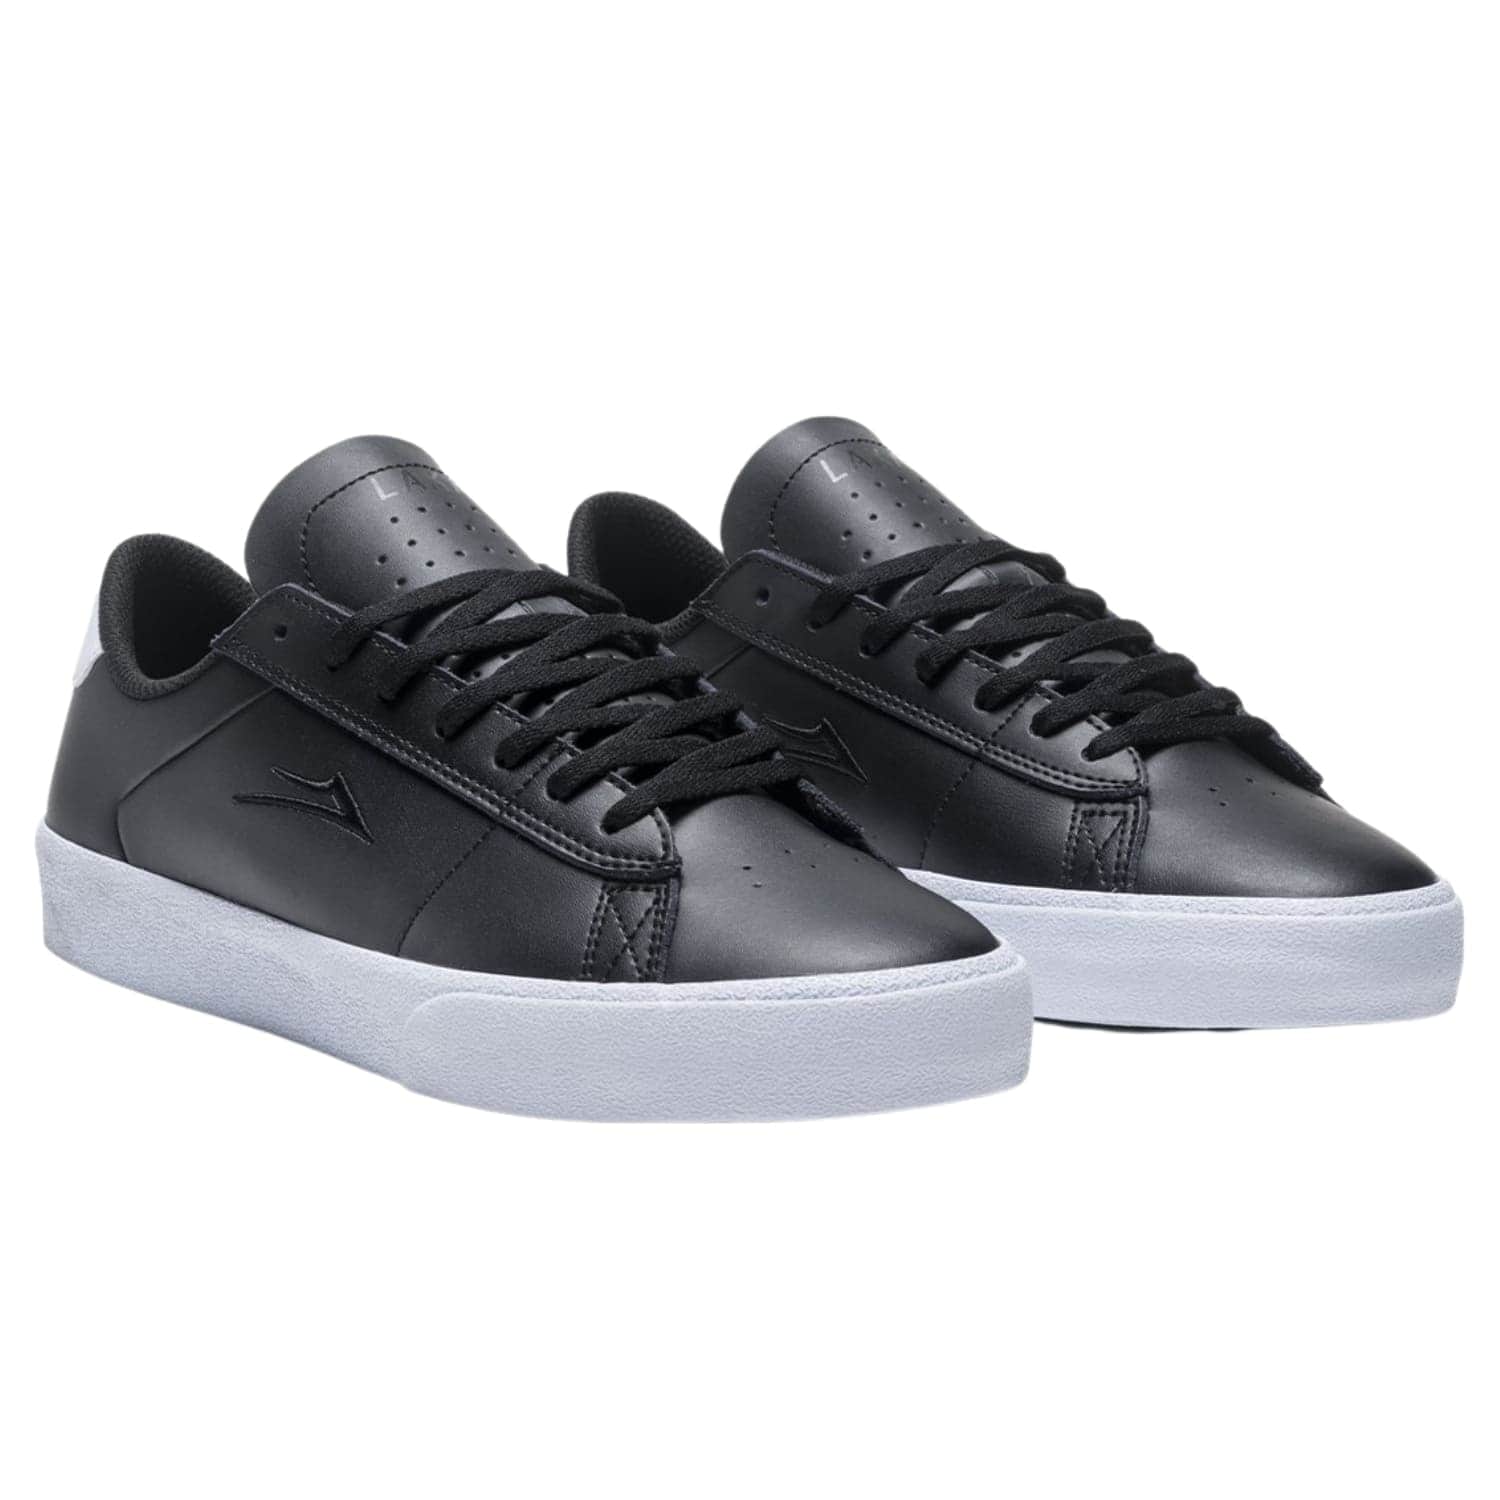 Lakai Newport Skate Shoes Black Leather - Mens Skate Shoes by Lakai